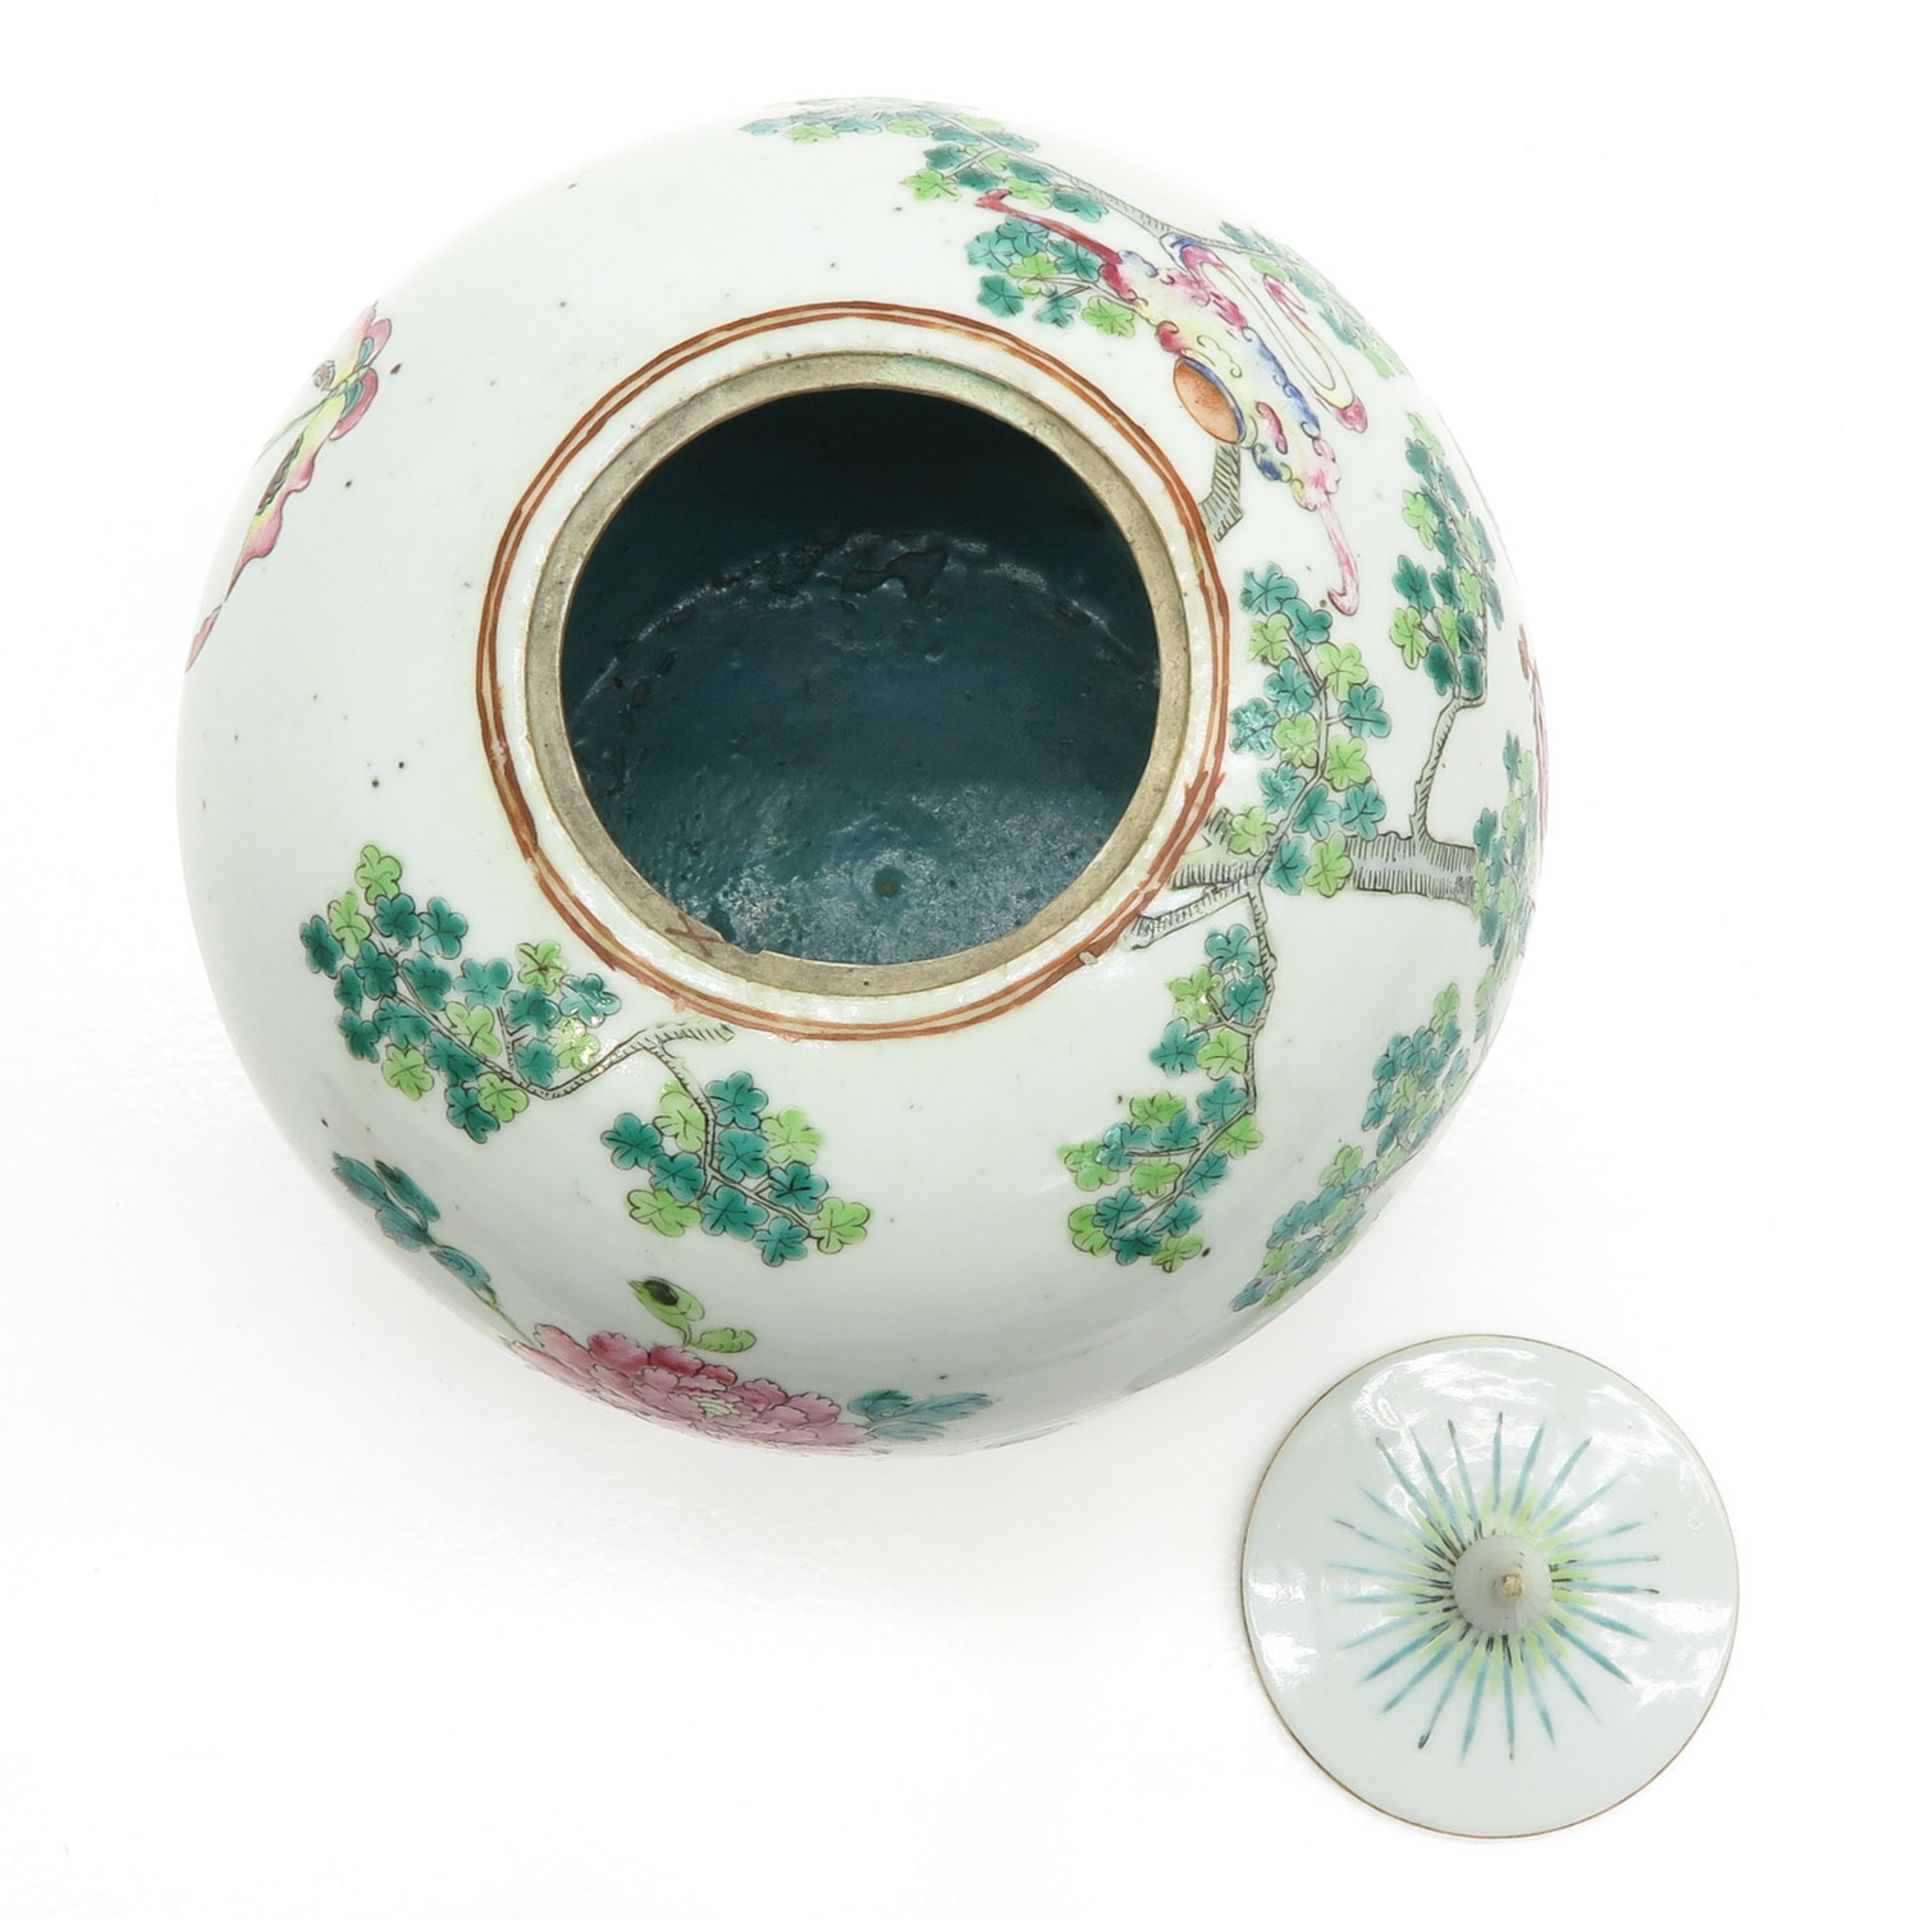 China Porcelain Covered Vase - Image 5 of 6